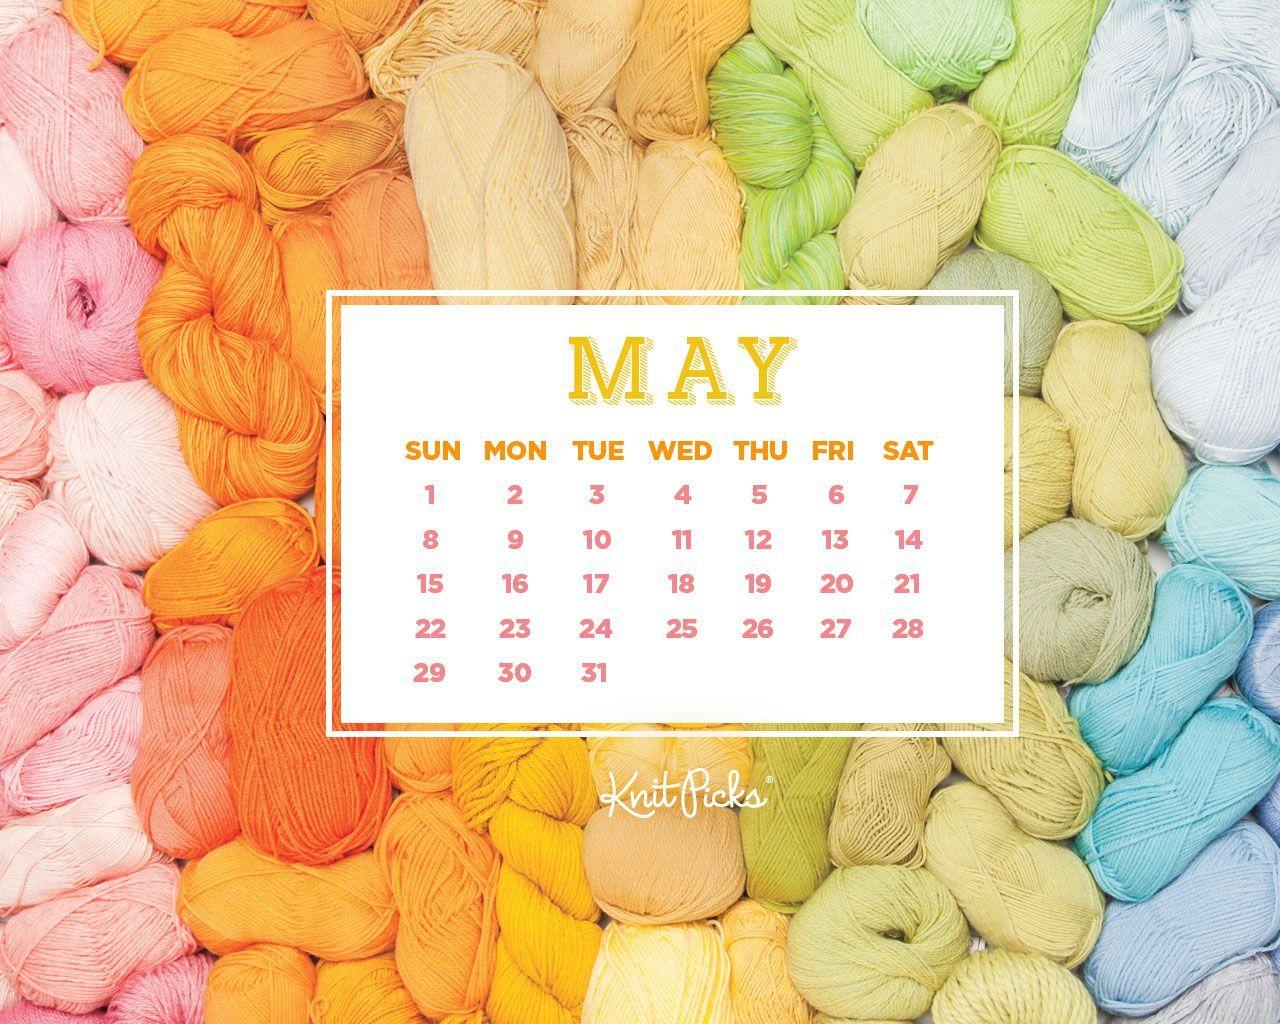 May 2016 Calendar Staff Knitting Blog